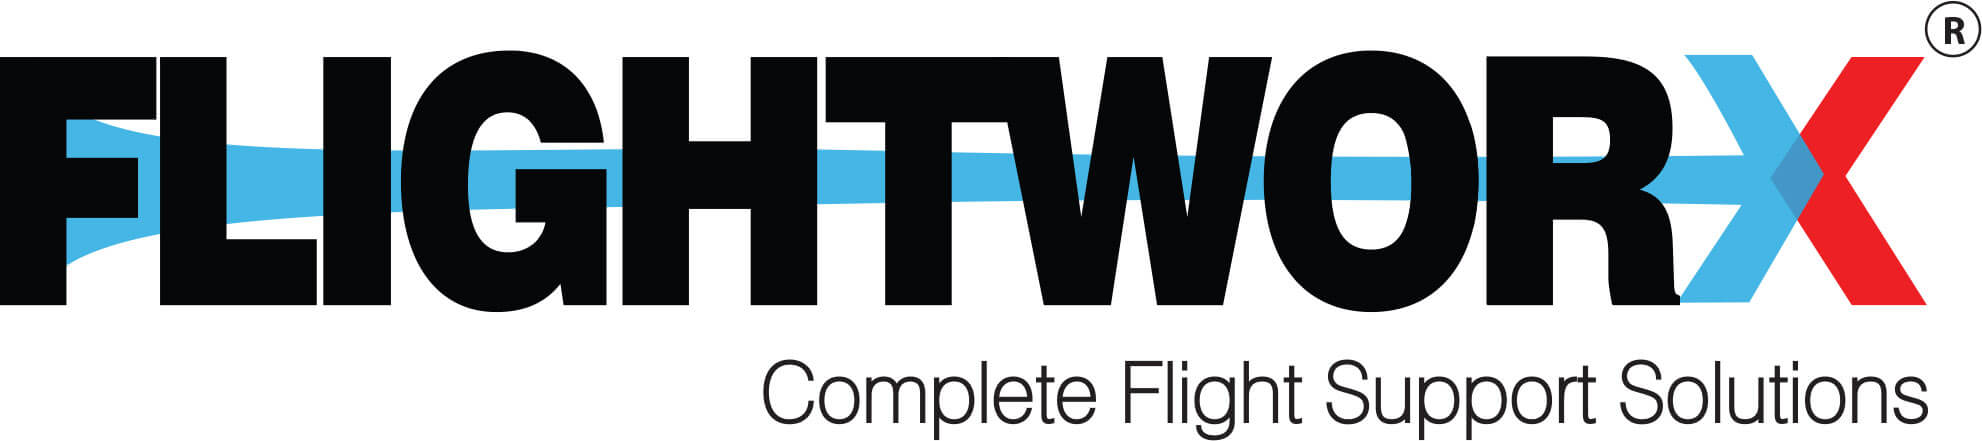 Flightworx logo